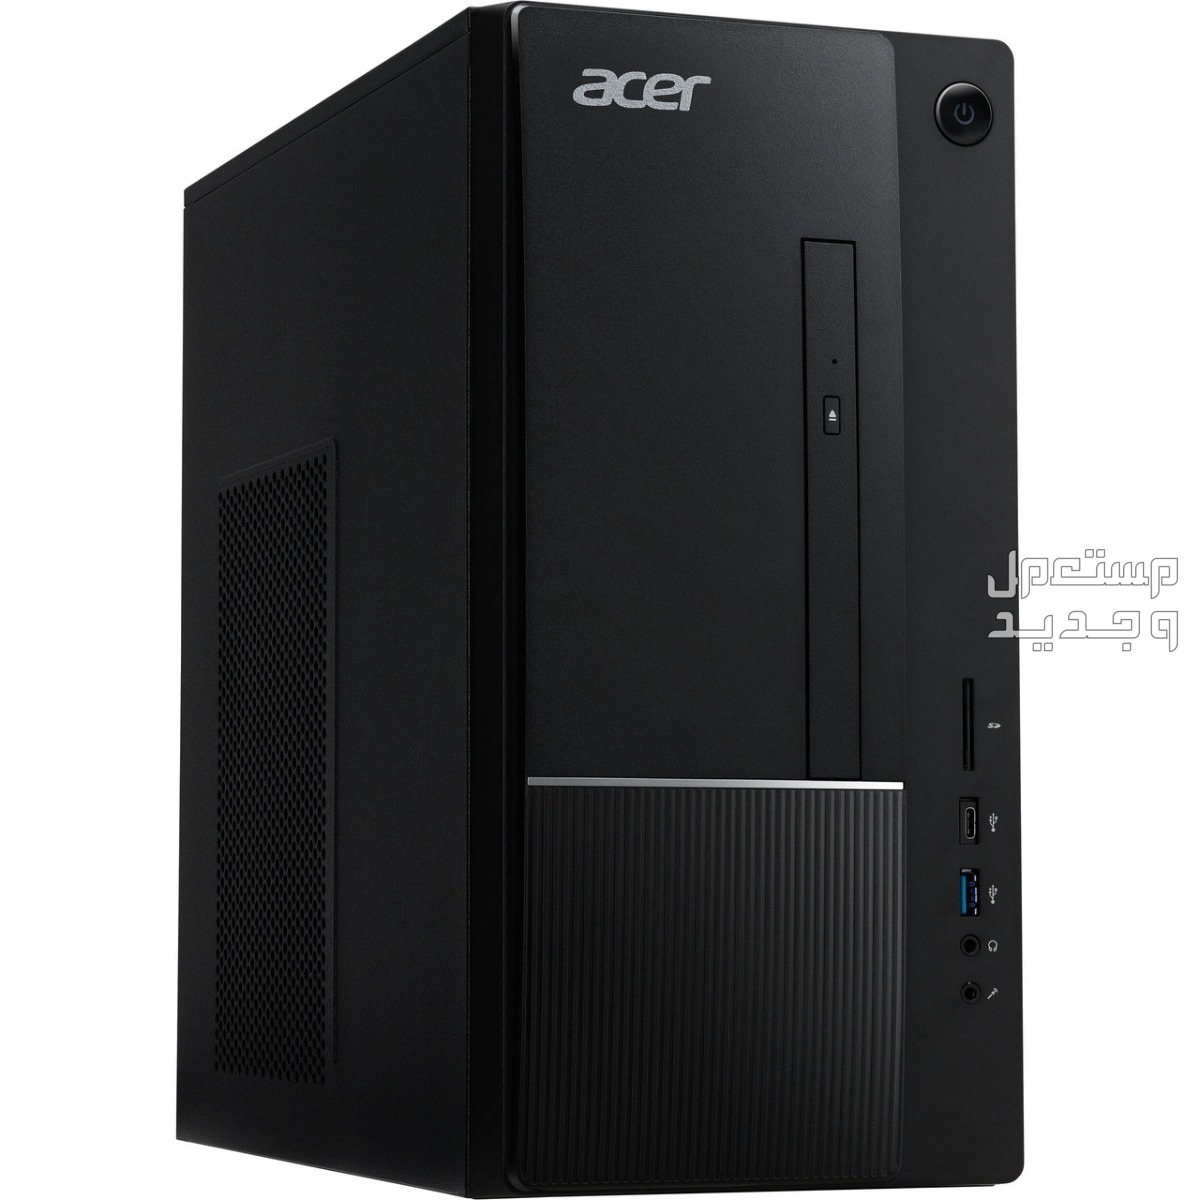 تعرف على جهاز كمبيوتر مكتبي Acer Aspire TC-885-UA91 في عمان Acer Aspire TC-885-UA91